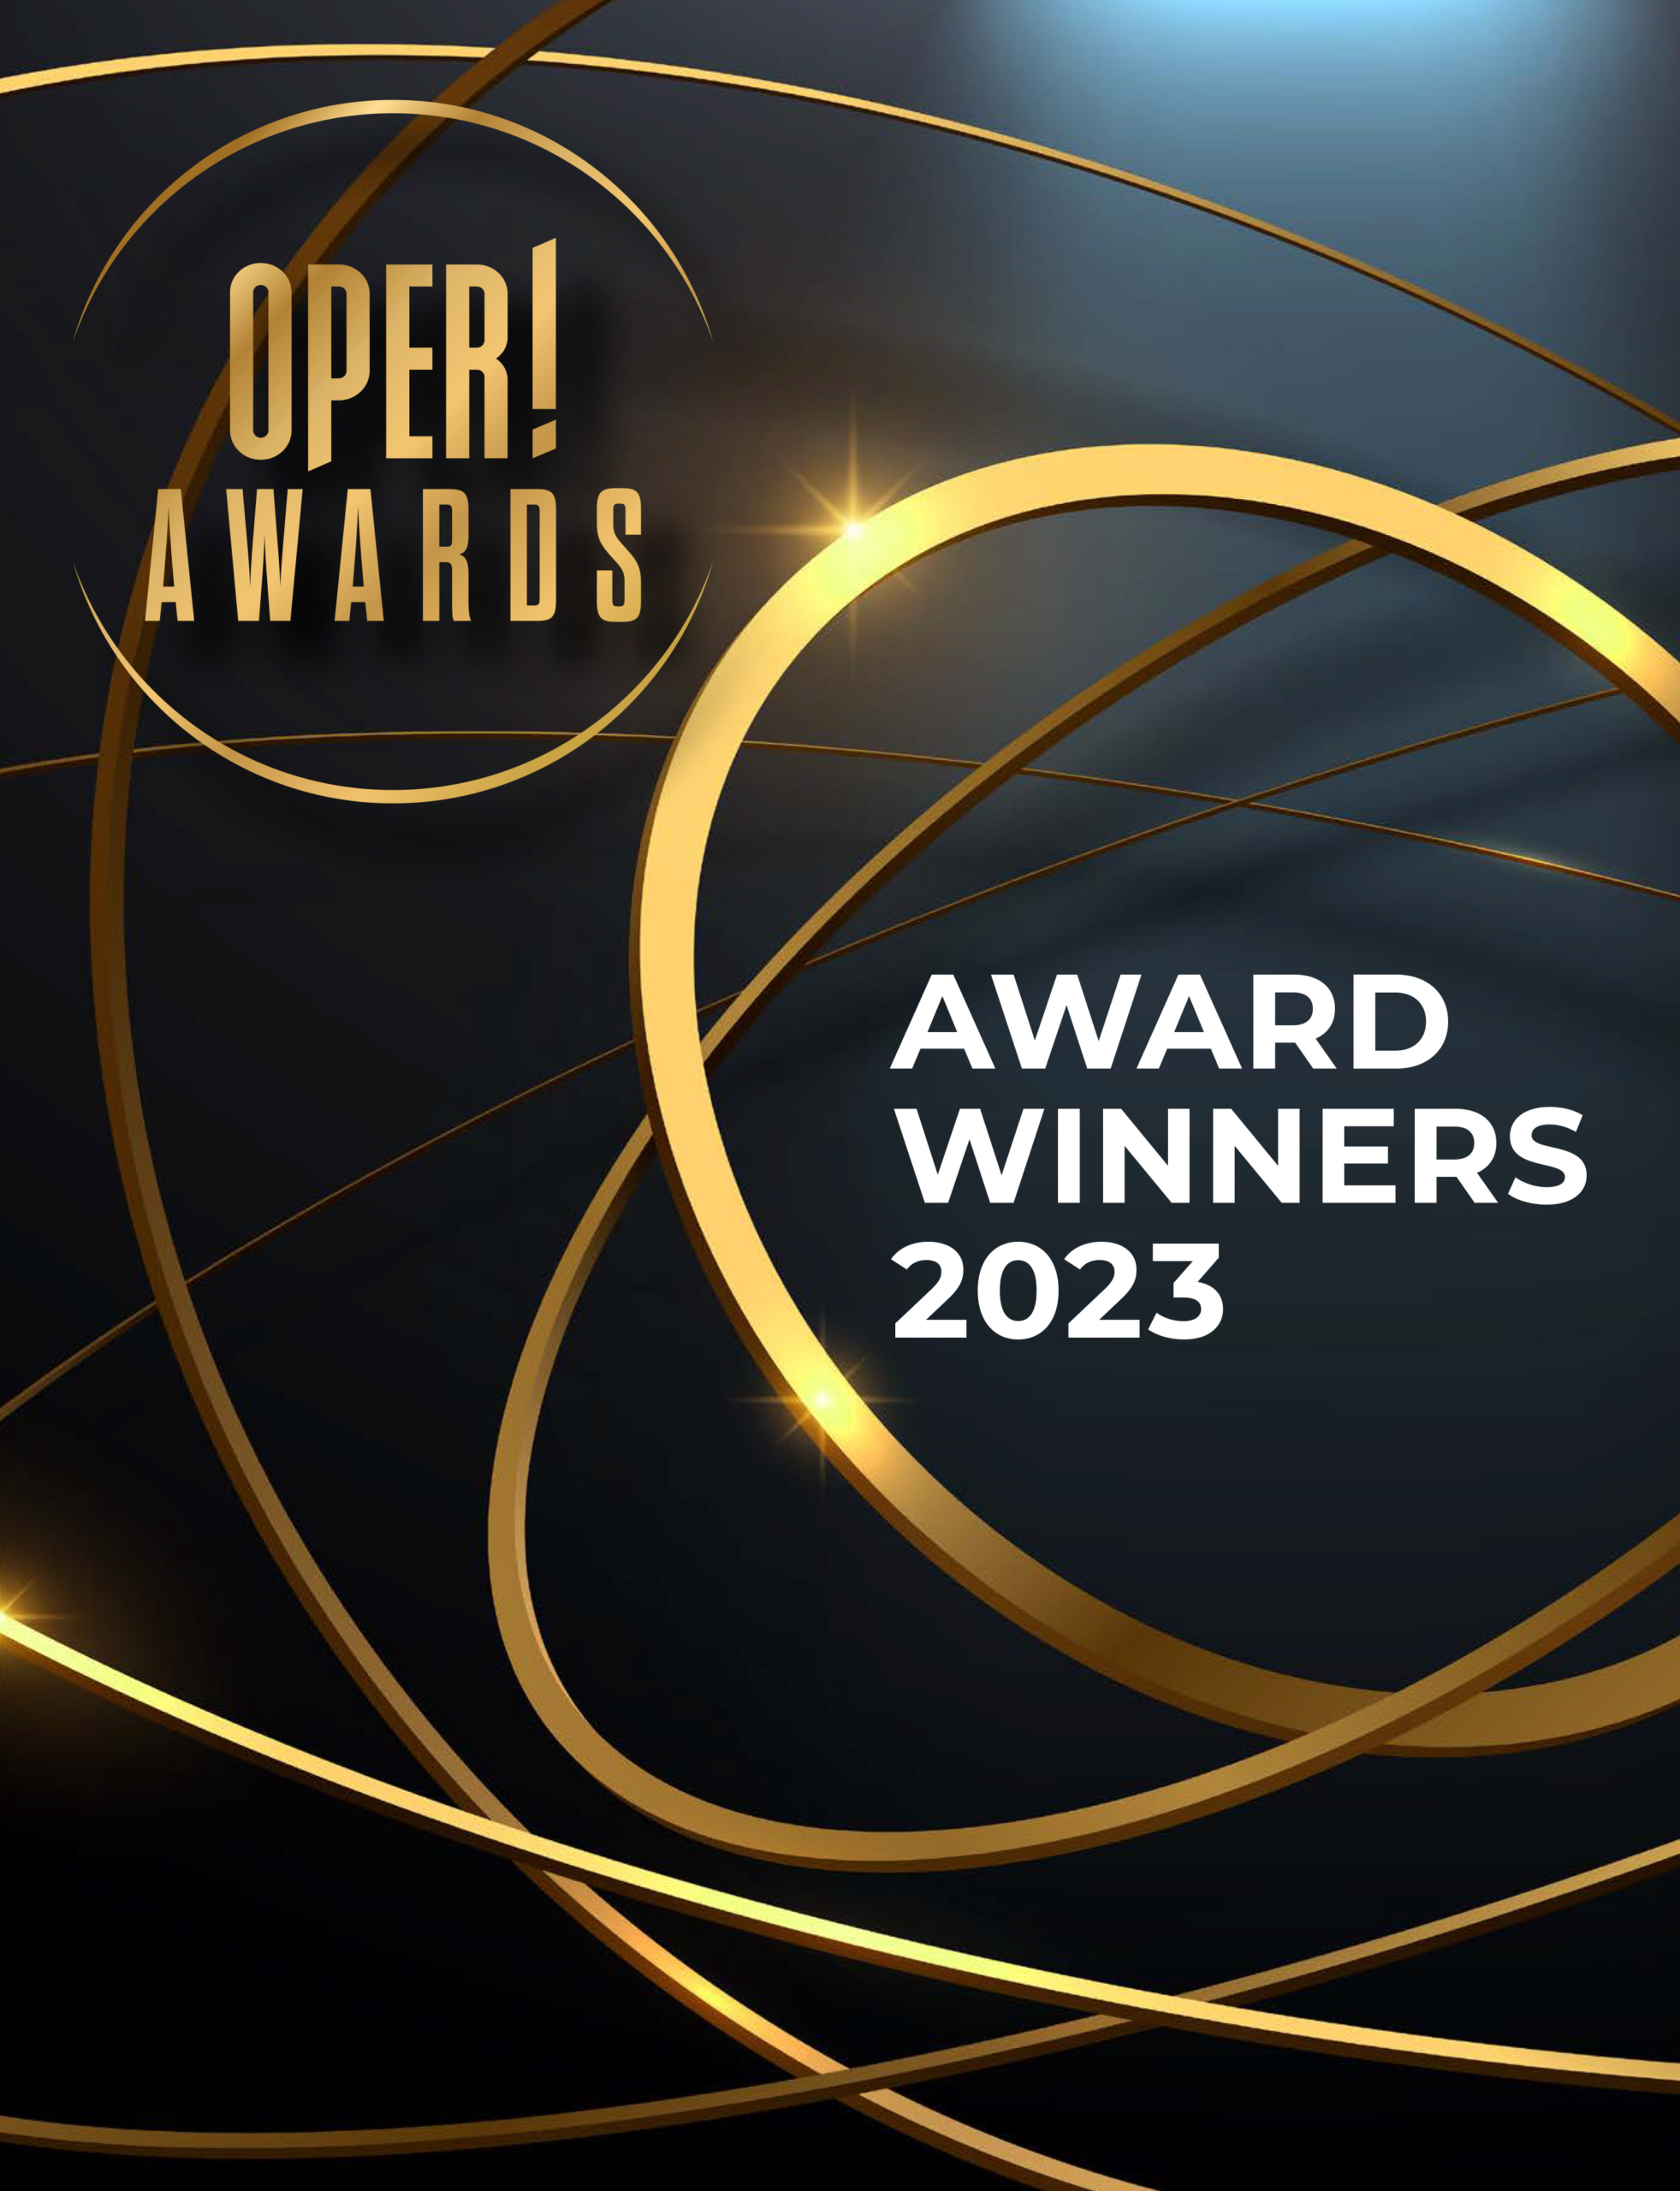 Award Winners Oper! Awards 2023 - Alle Preisträger mit Bildergalerie